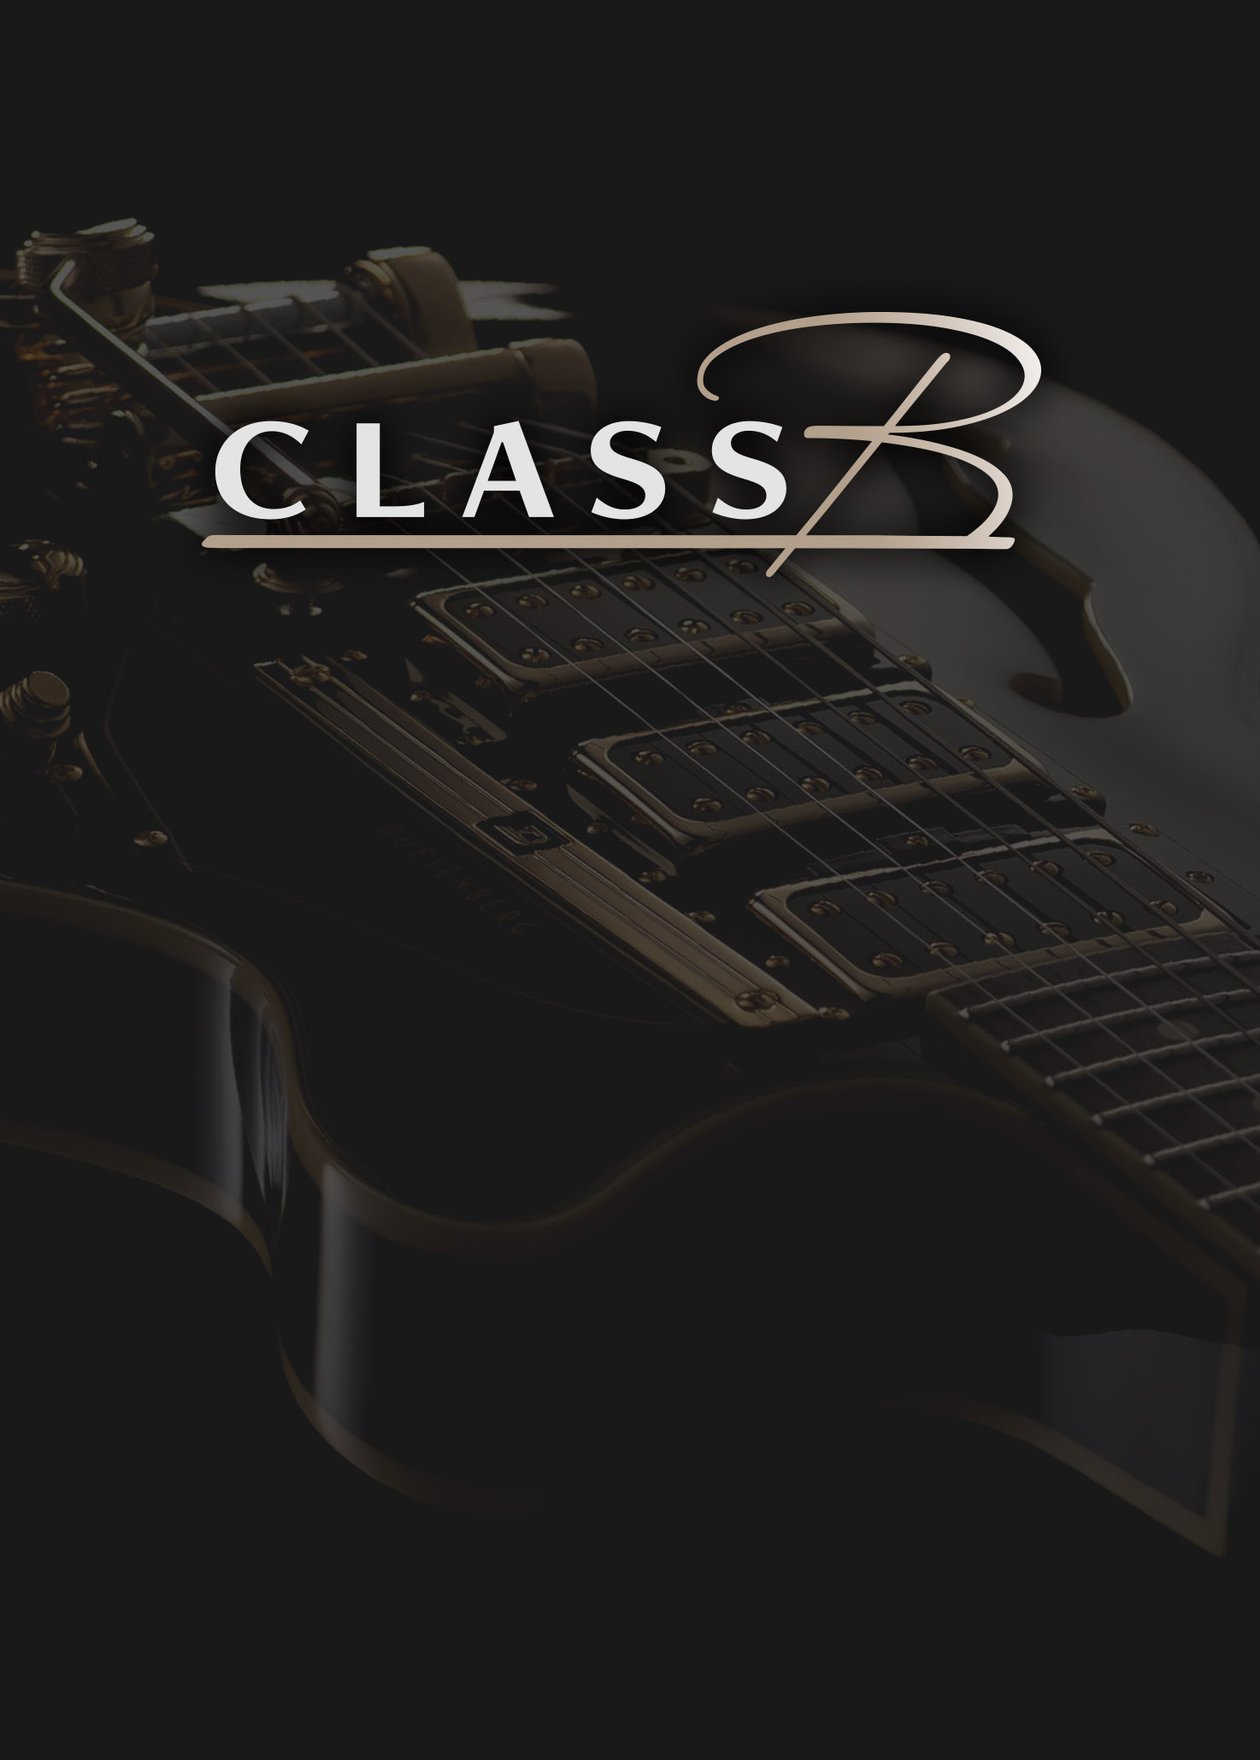 Website Banner for the Duesenberg Class-B Online Store